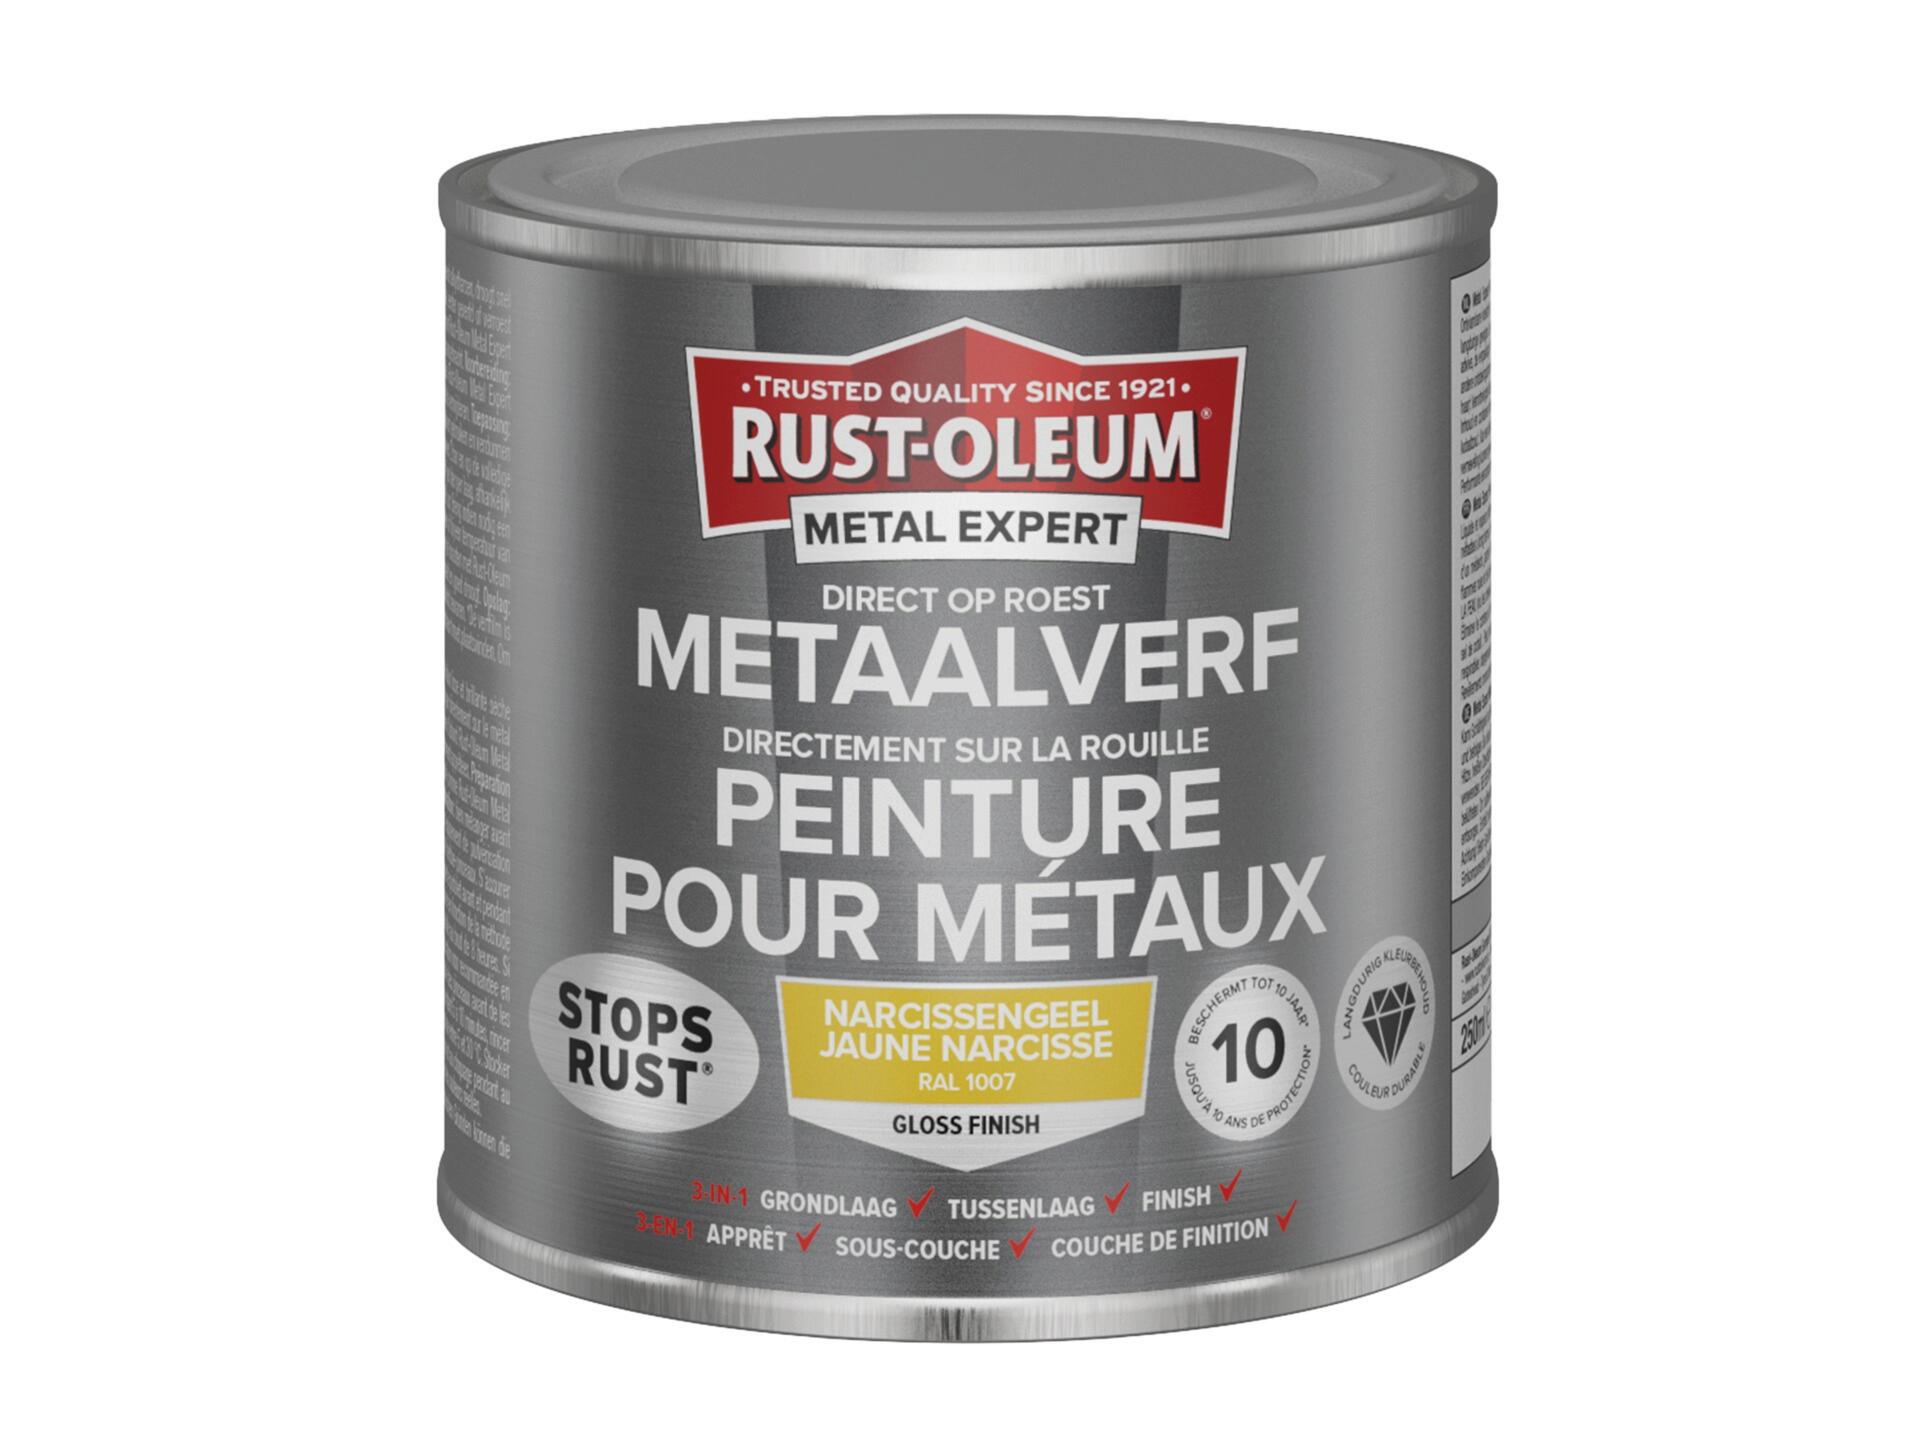 Rust-oleum Metal Expert peinture pour métaux brillant 250ml jaune narcisse